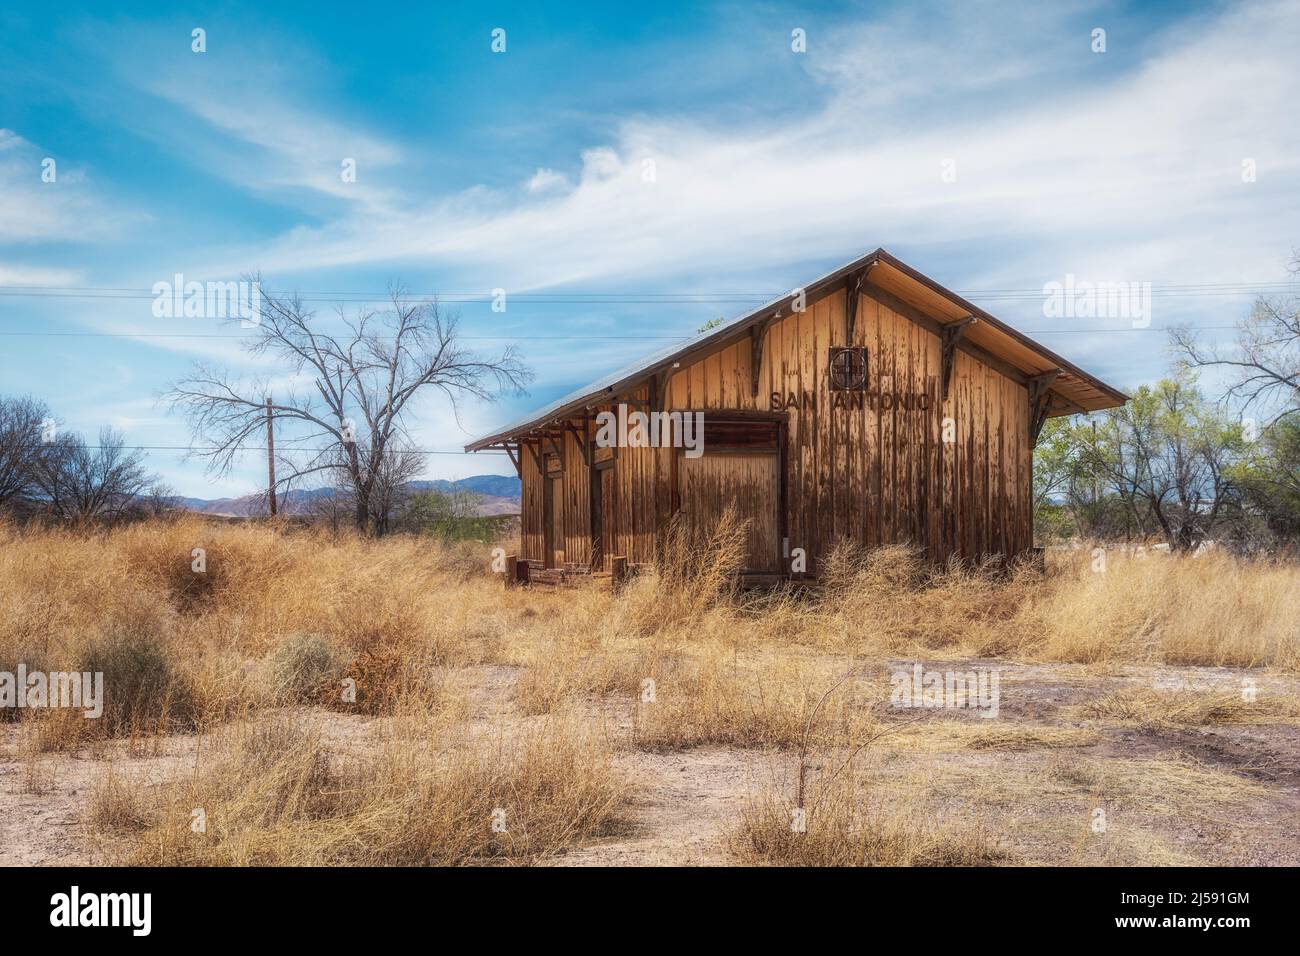 Abandoned Santa Fe Railroad Depot in San Antonio, New Mexico, USA Stock Photo